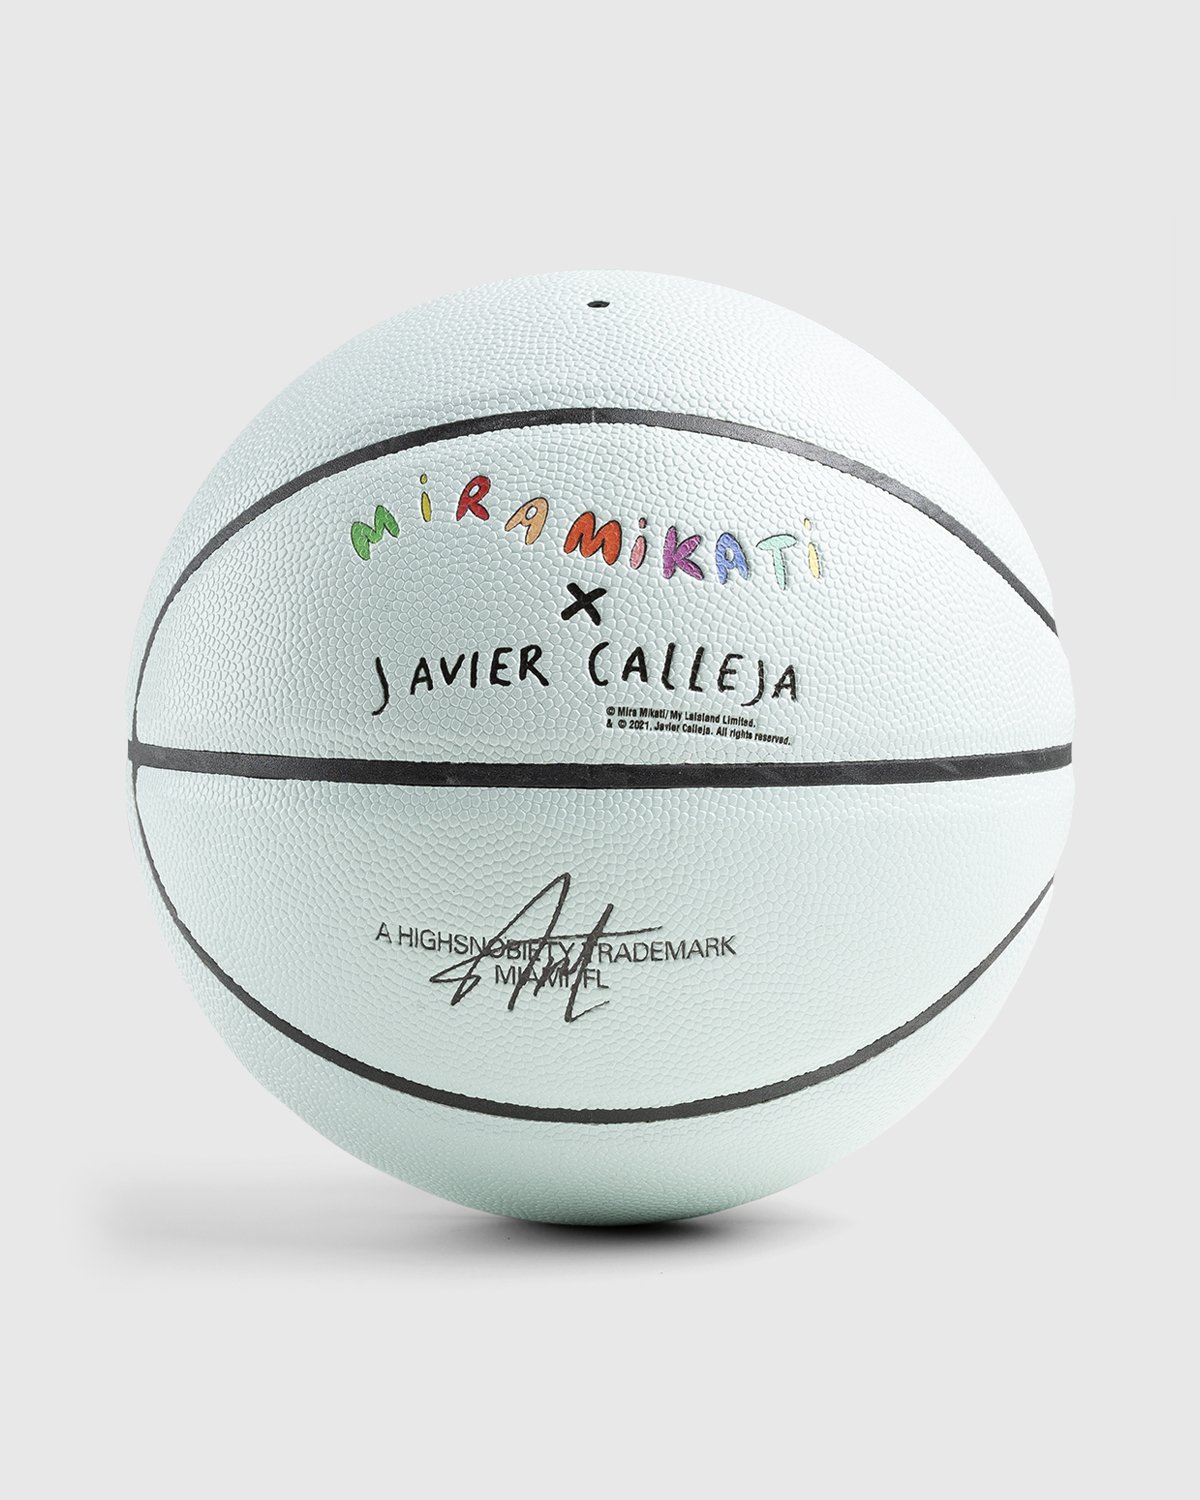 Javier Calleja x Mira Mikati x Highsnobiety - Basketball - Lifestyle - Blue - Image 2